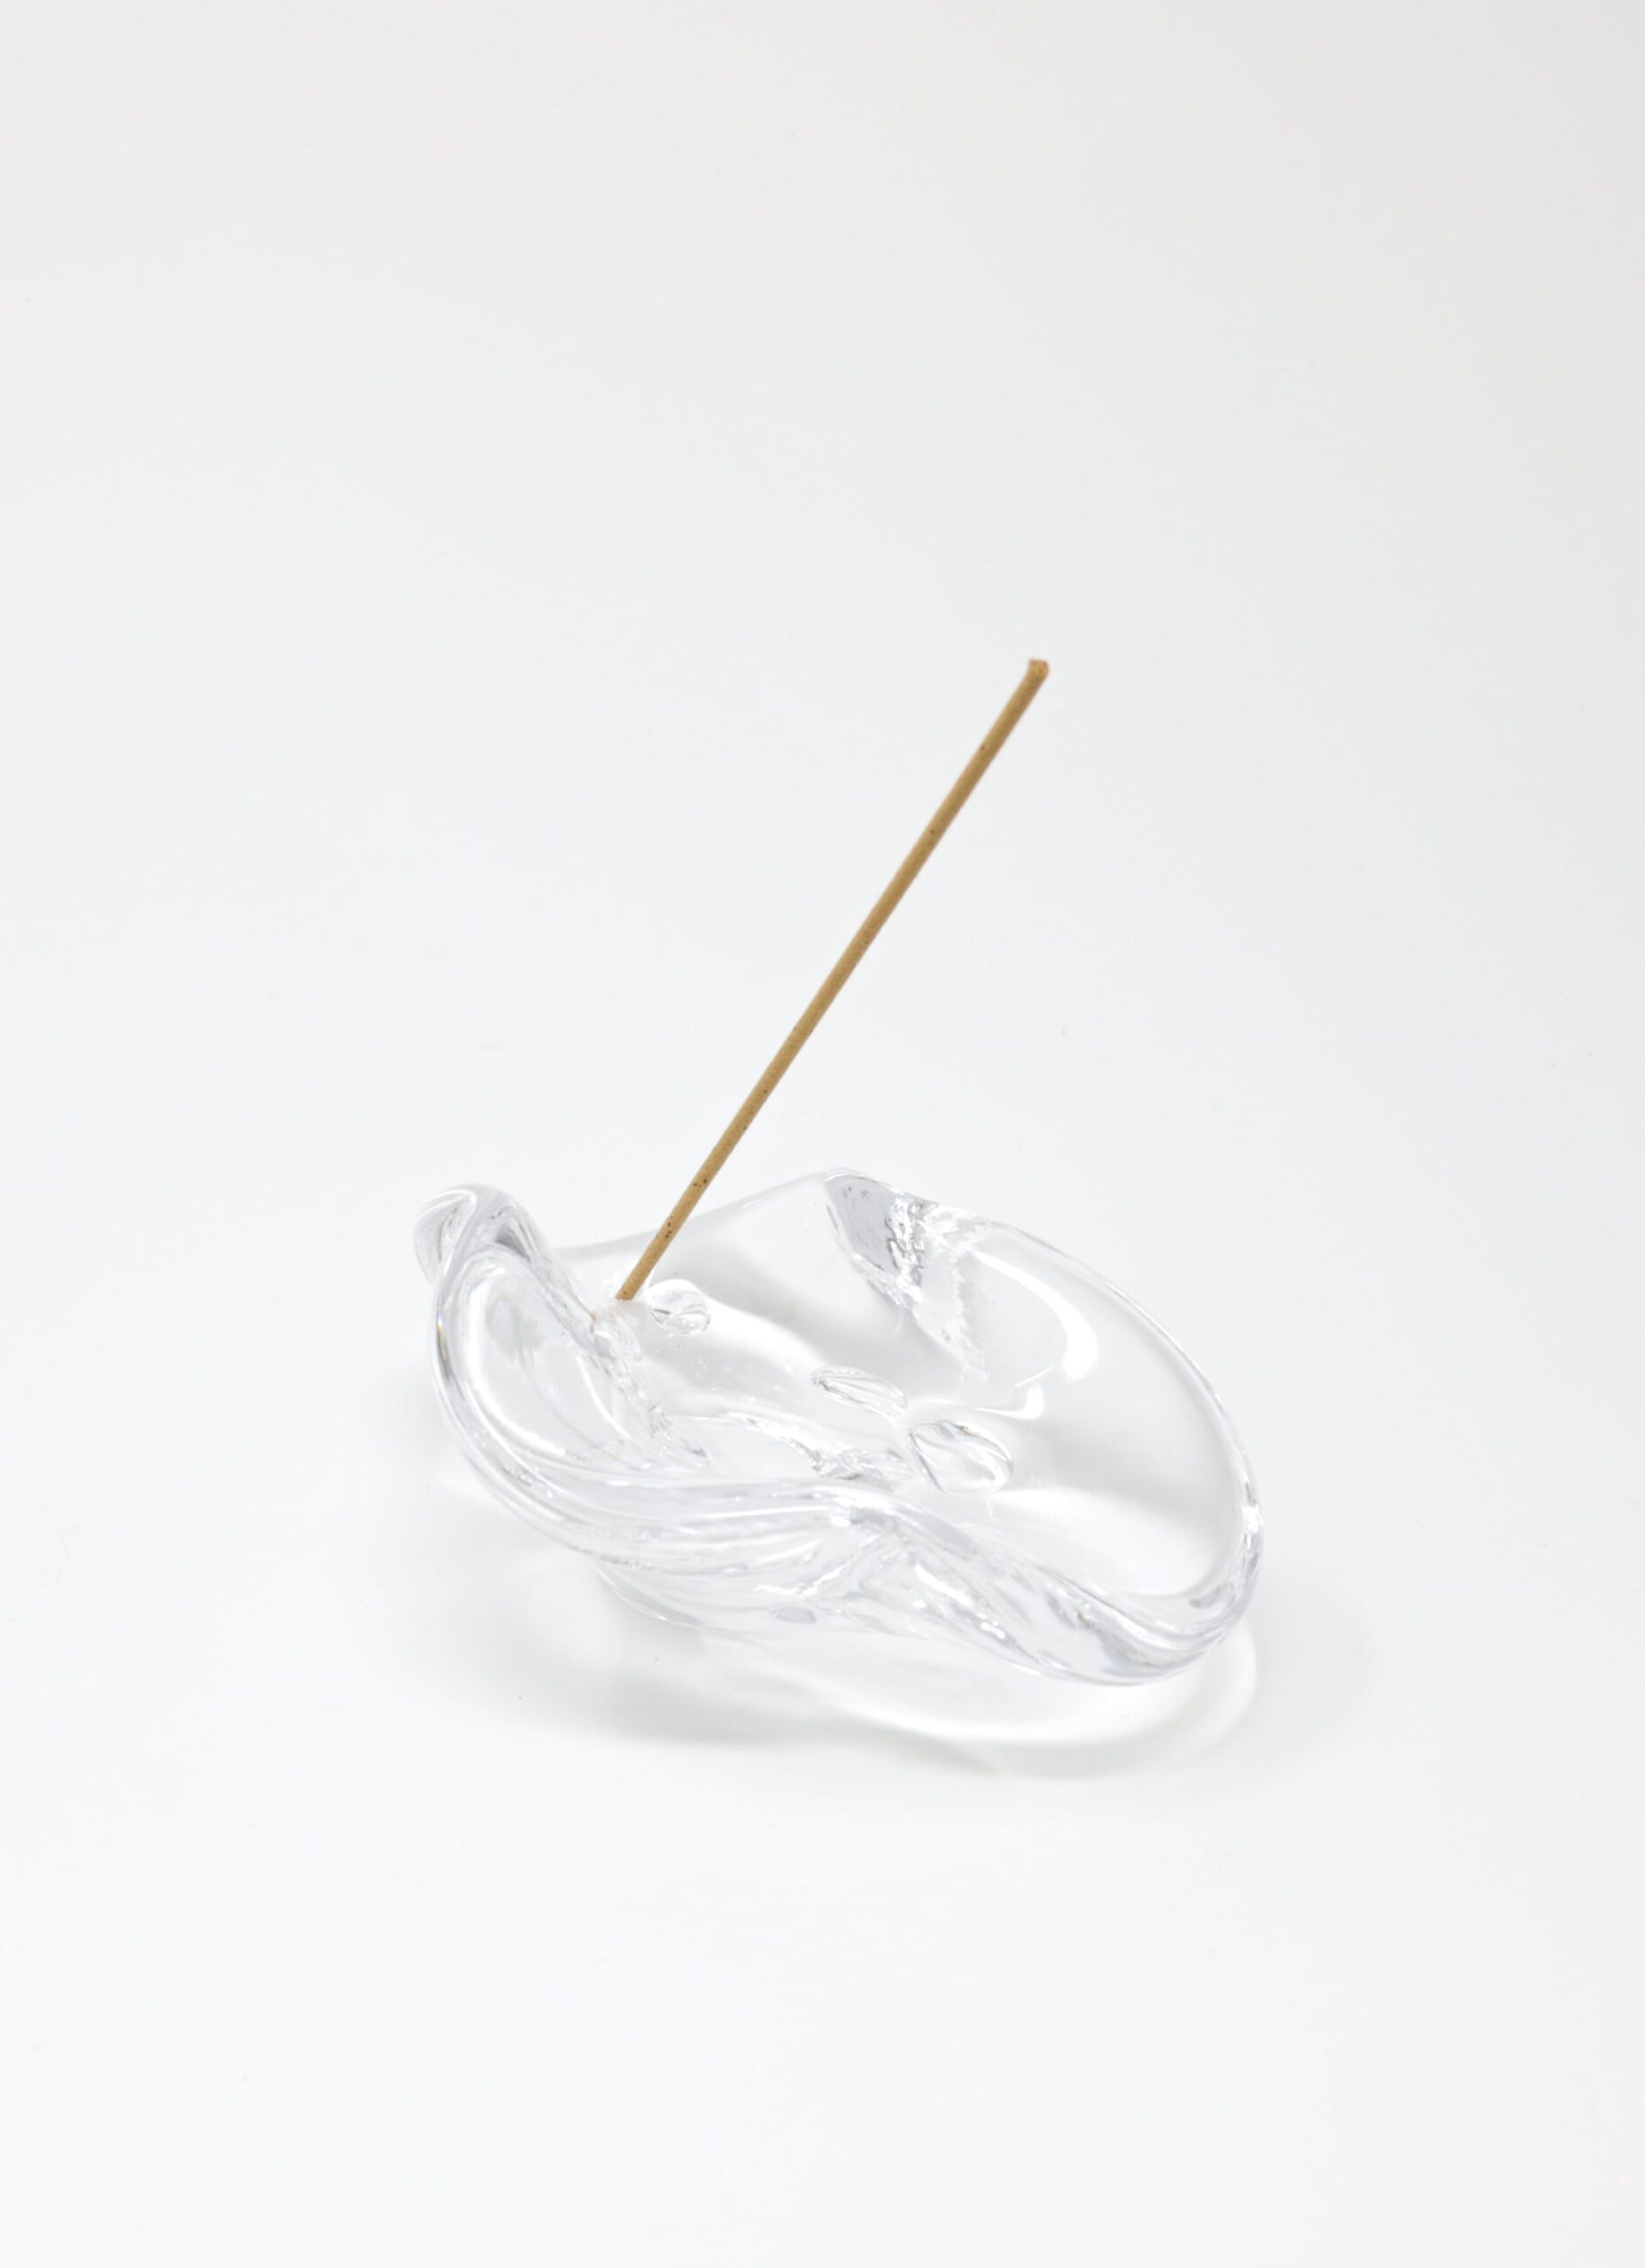 Lan Glass - Incense Stand - Hand-blown glass